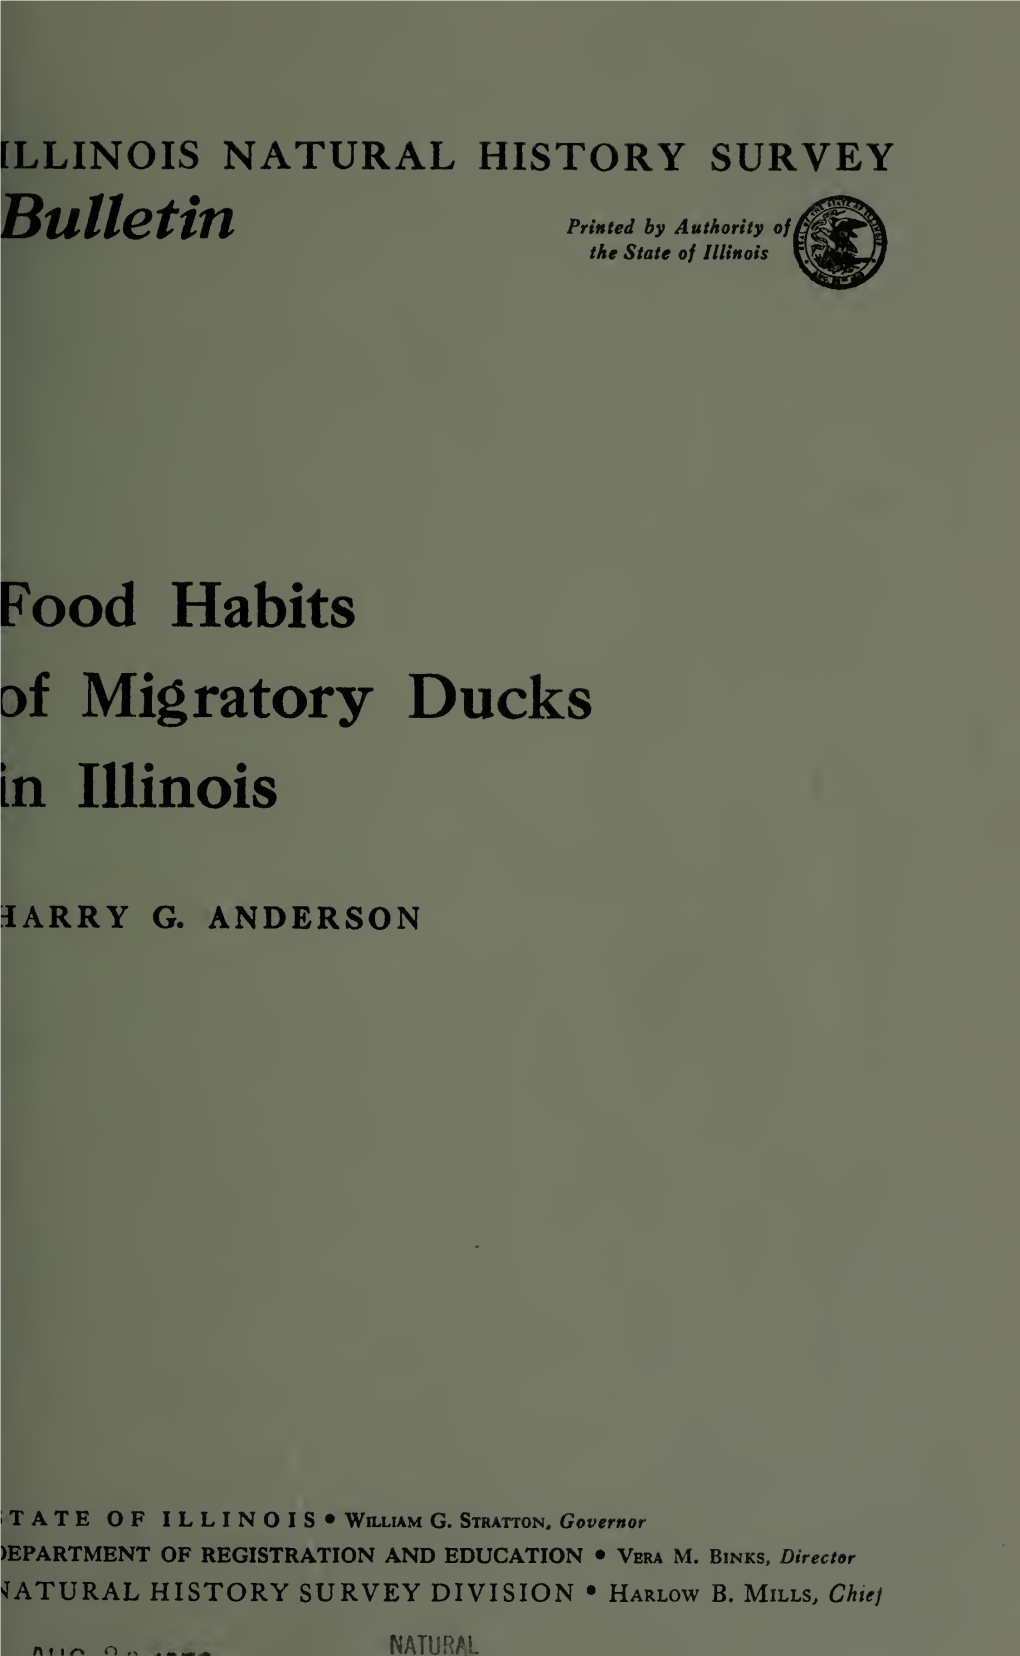 Of Migratory Ducks in Illinois